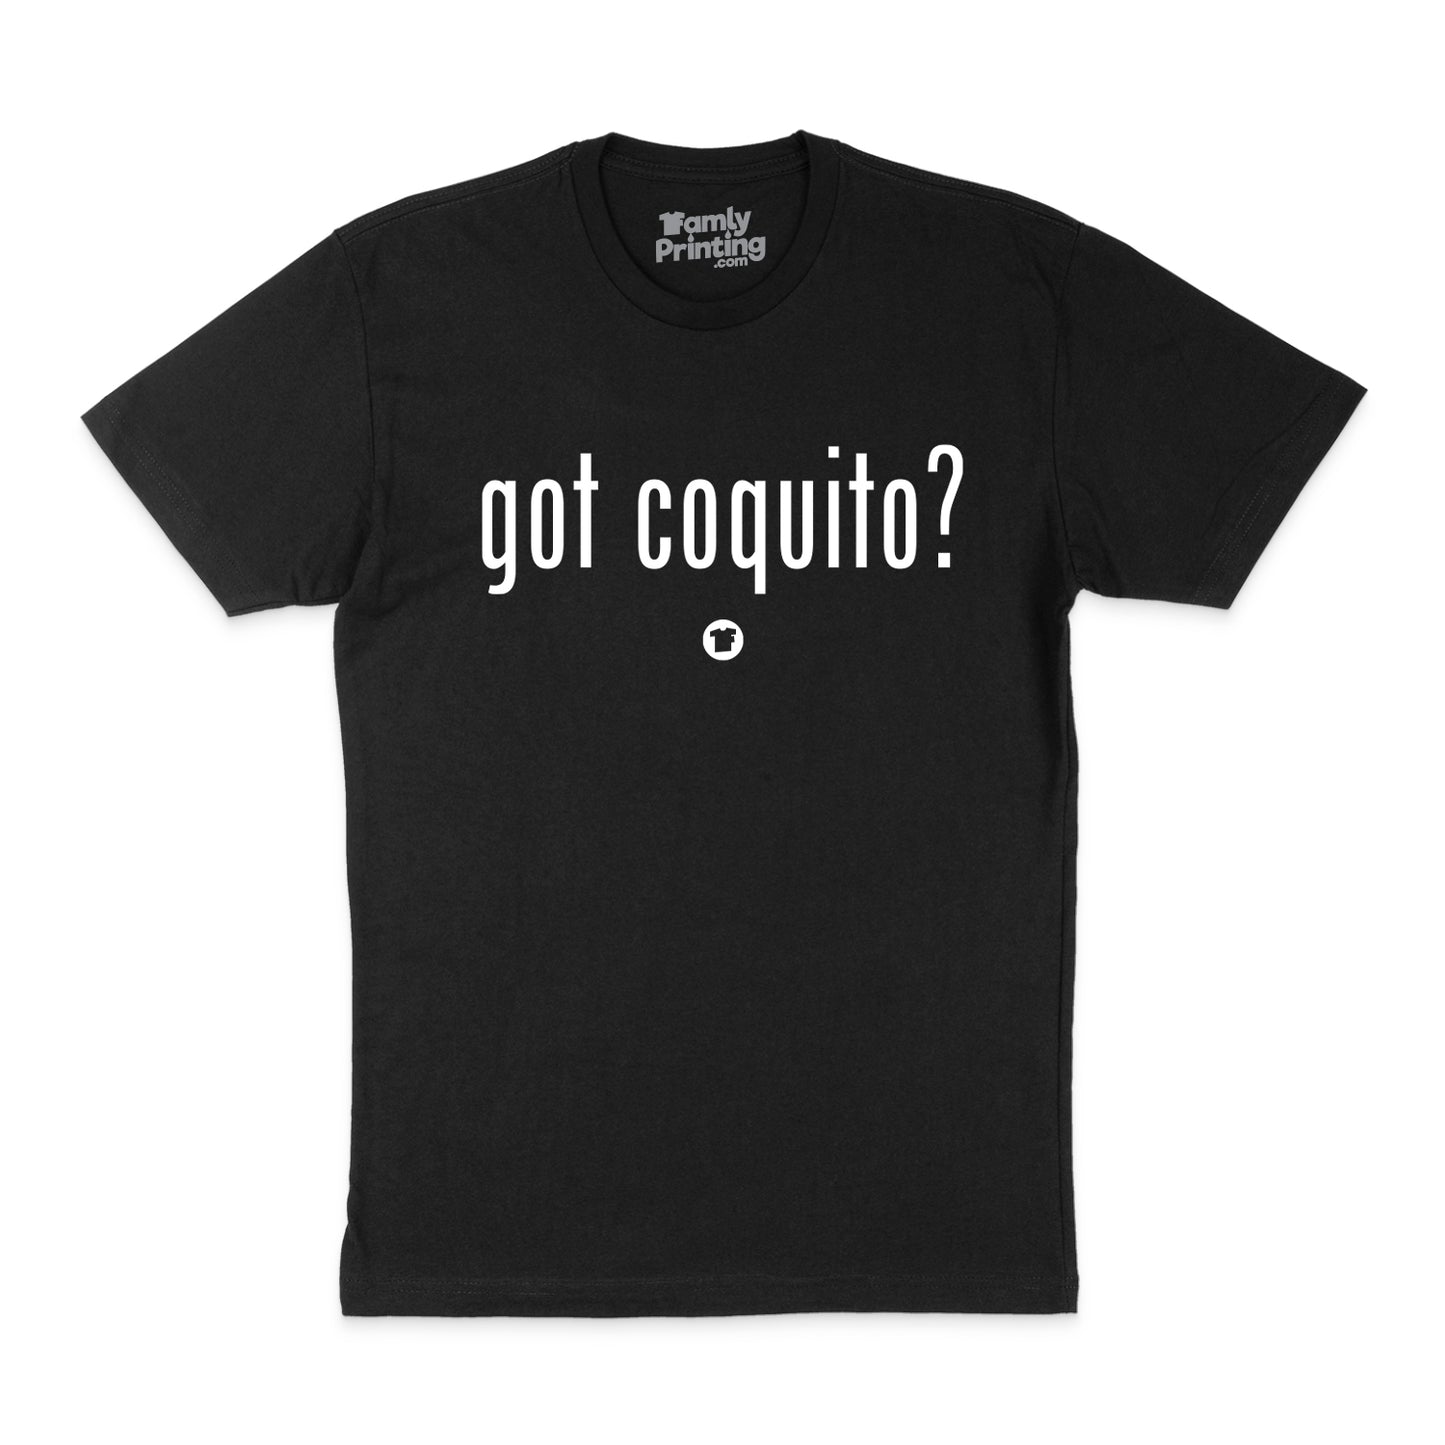 Got Coquito?